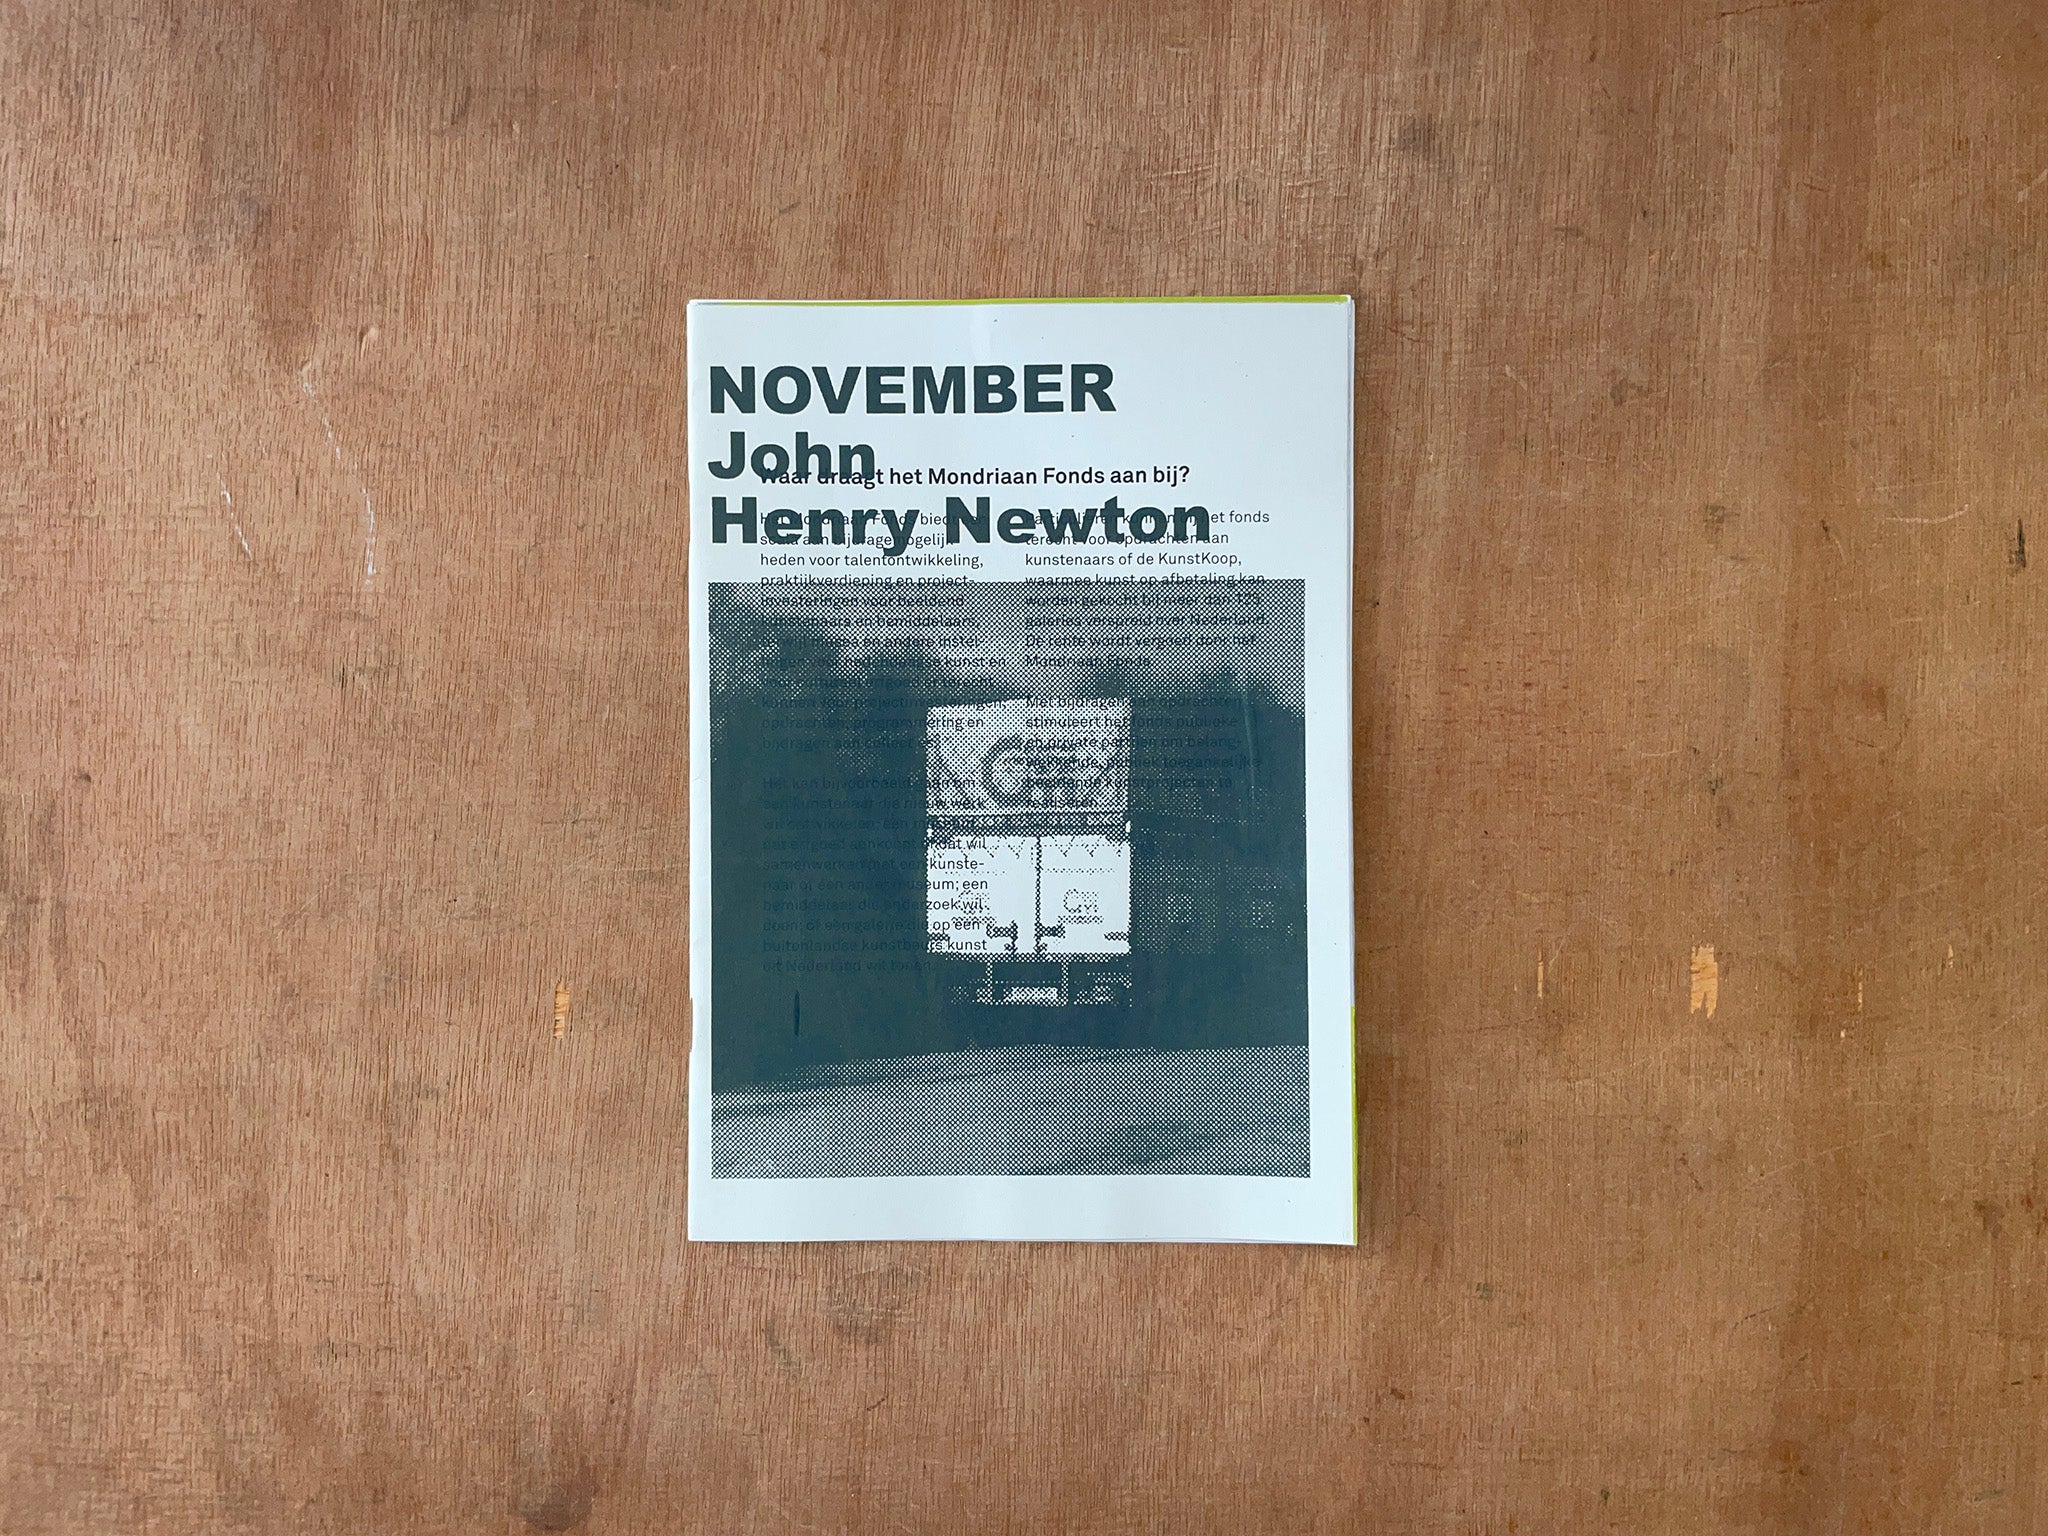 NOVEMBER by John Henry Newton